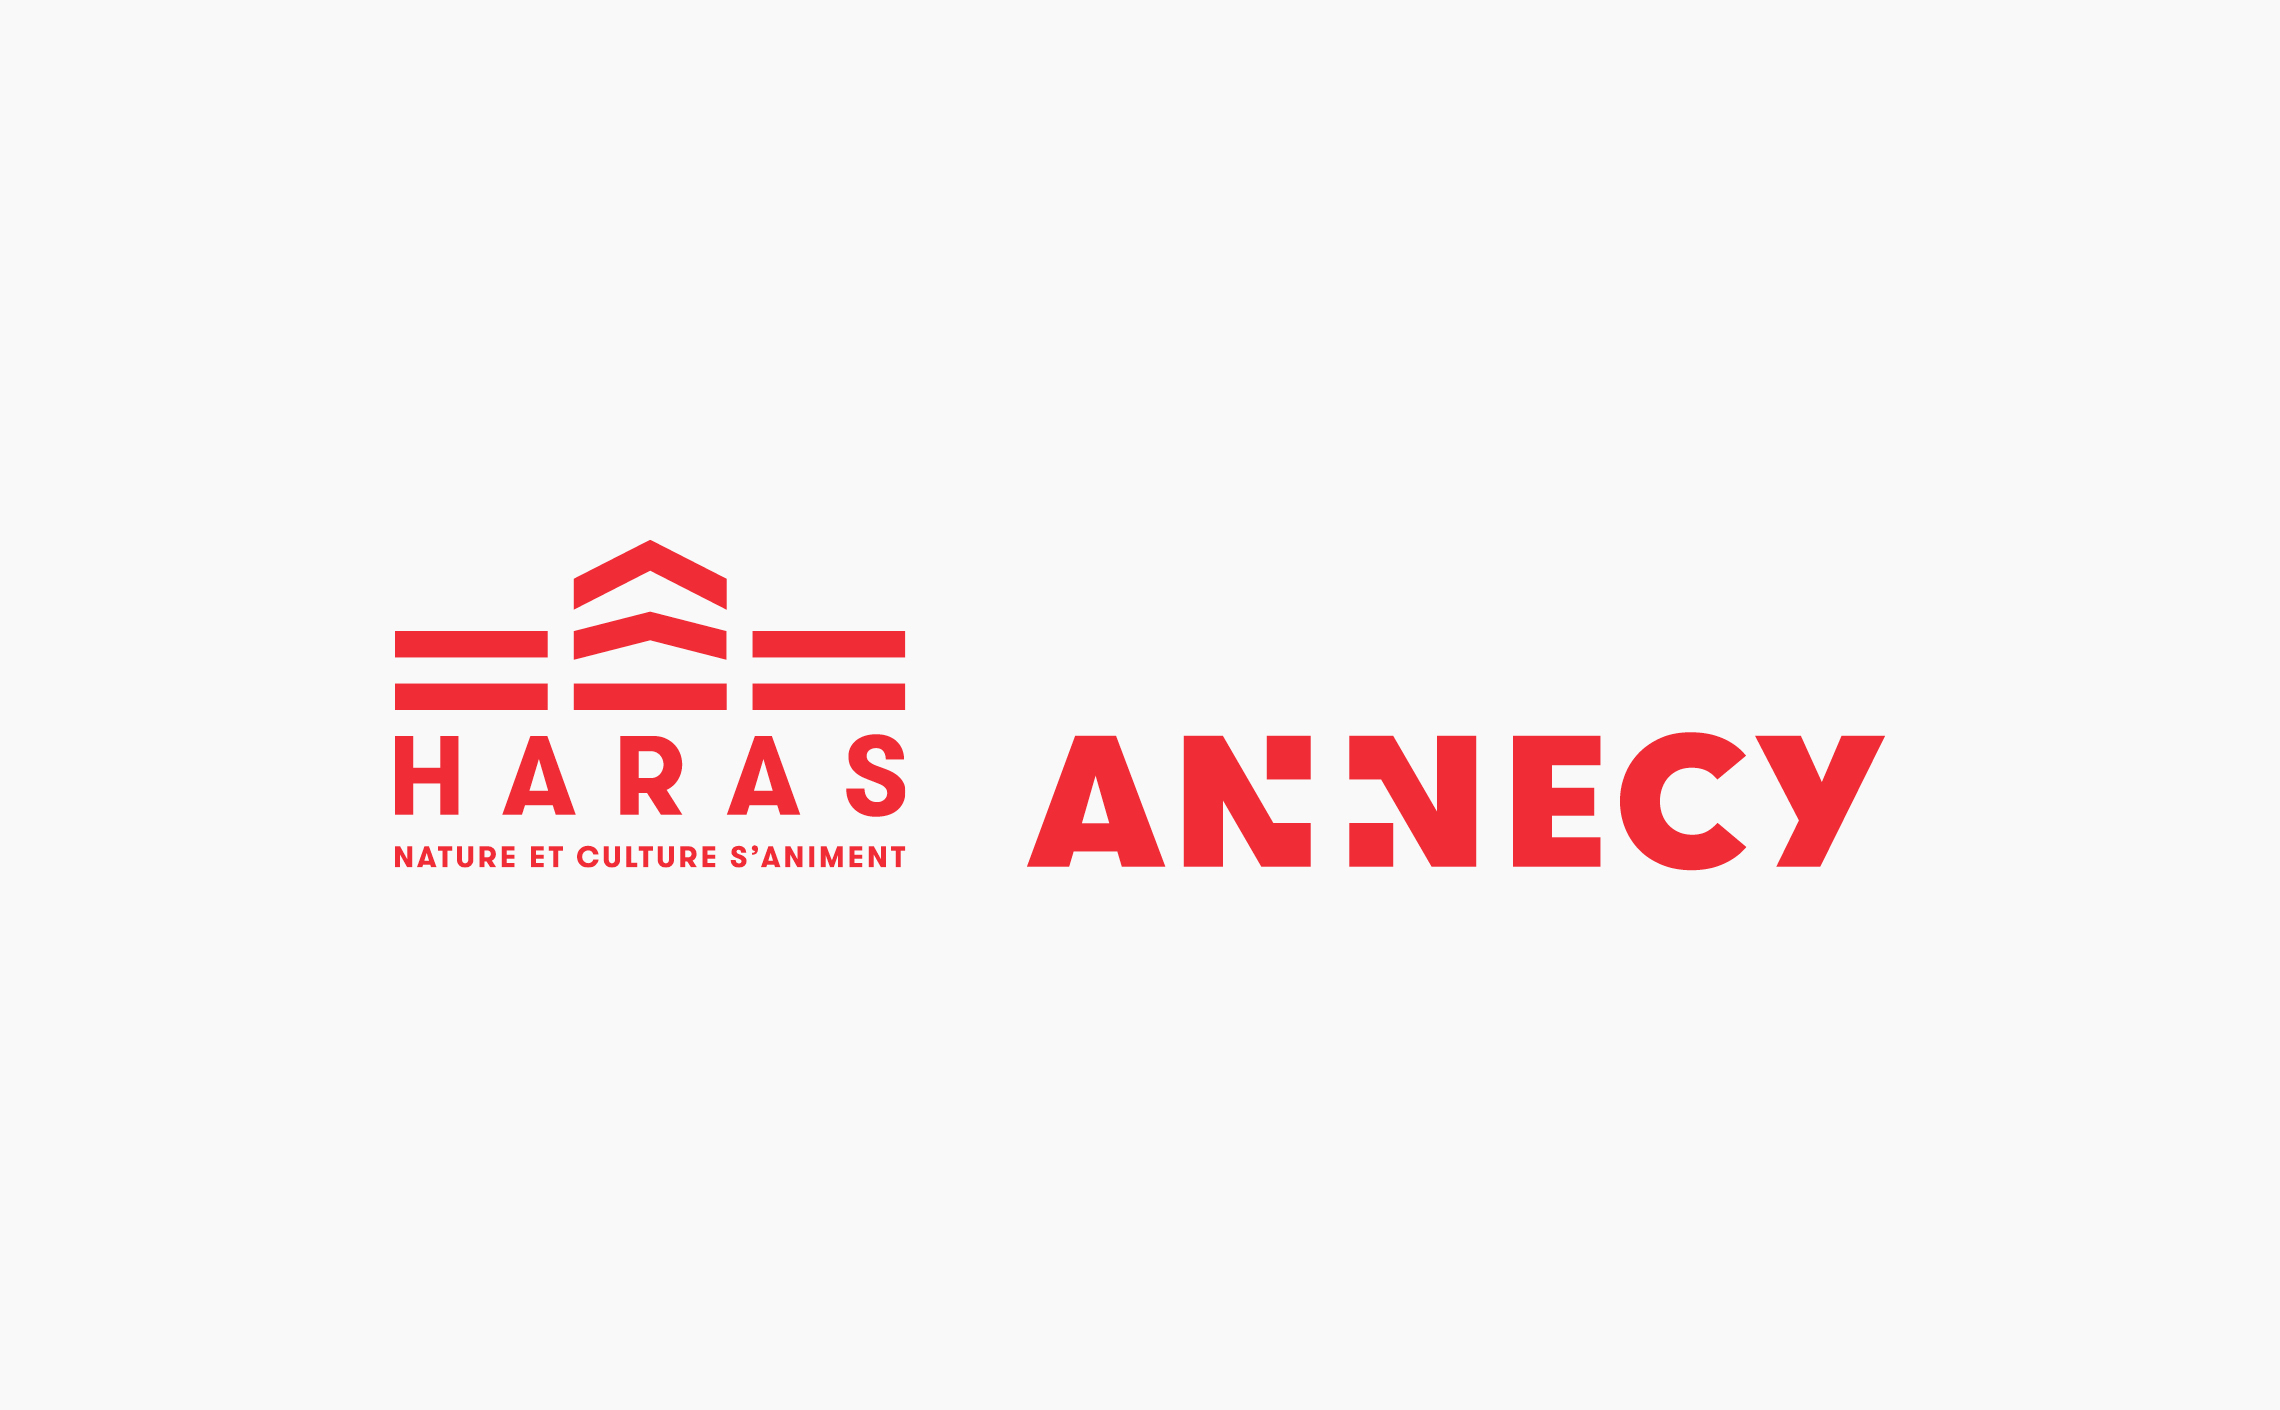 Haras-Annecy-identite-visuelle-projet-construction